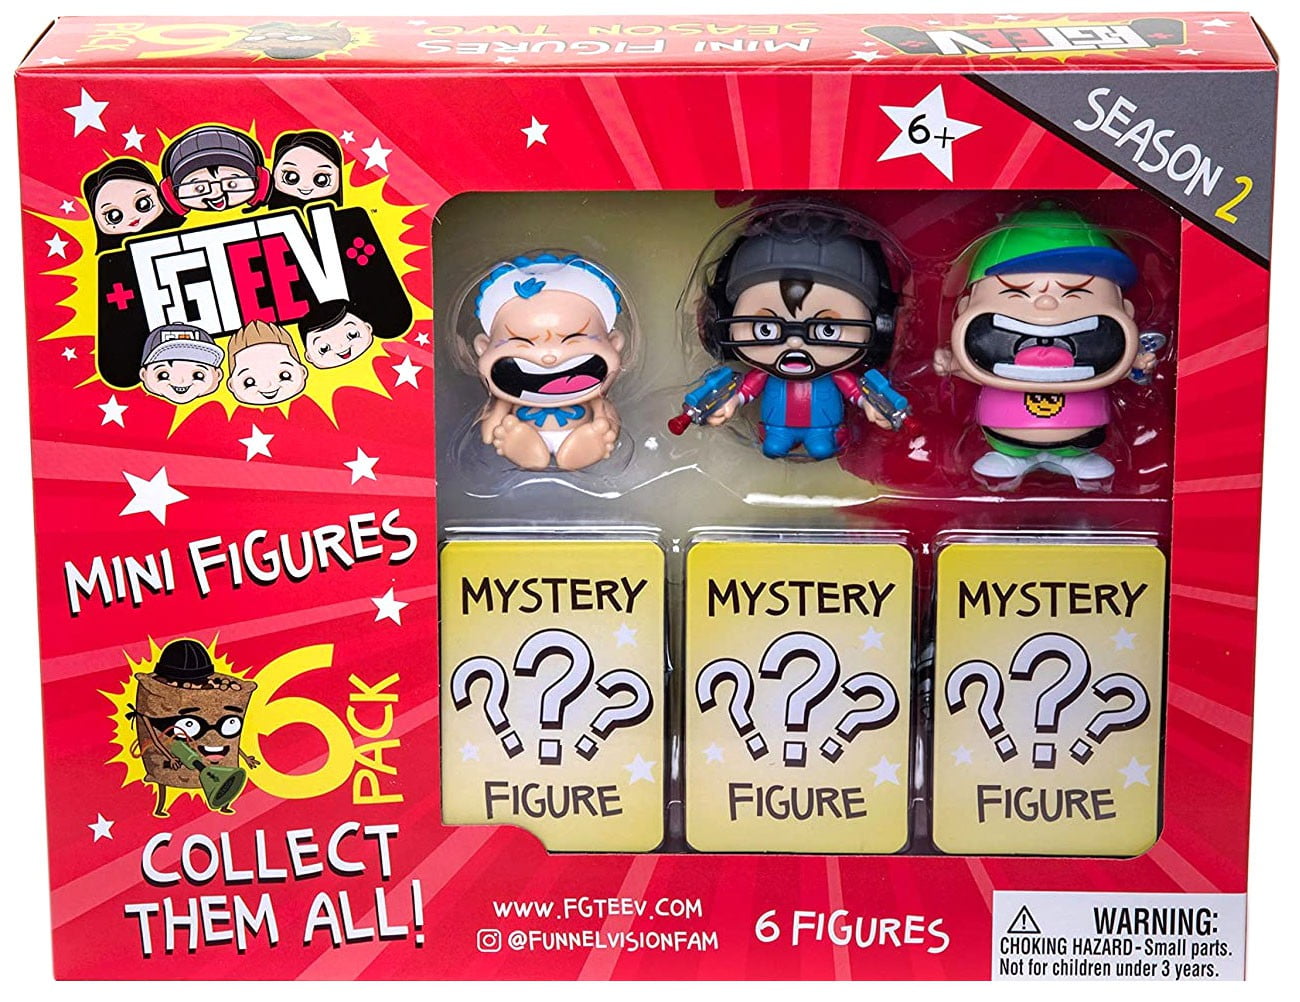 Fgteev Mini Mystery teev saison 2 Set avec Mini Figure Toy-Entièrement NEUF dans sa boîte 